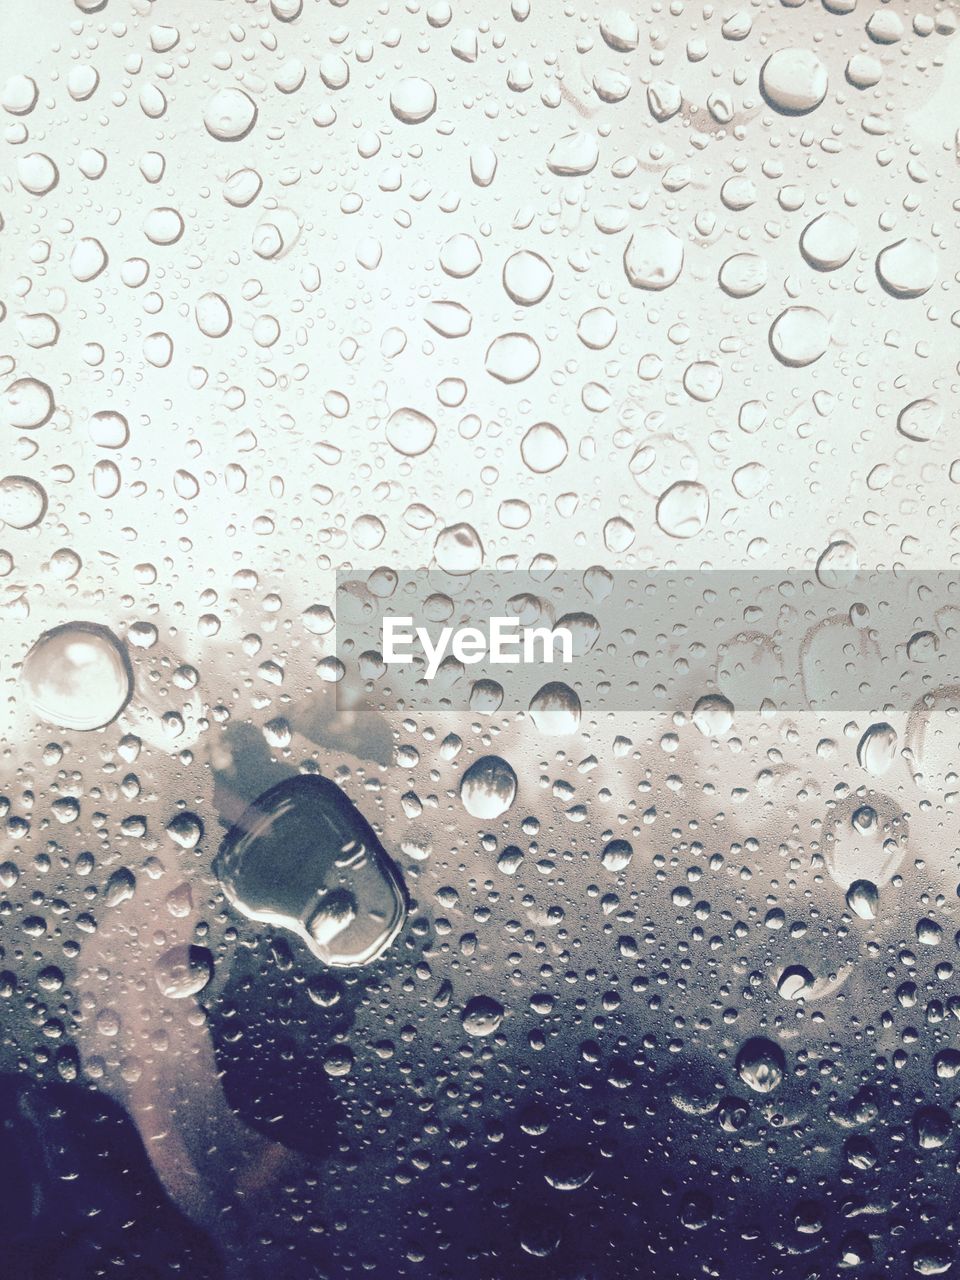 Morning rain on the window